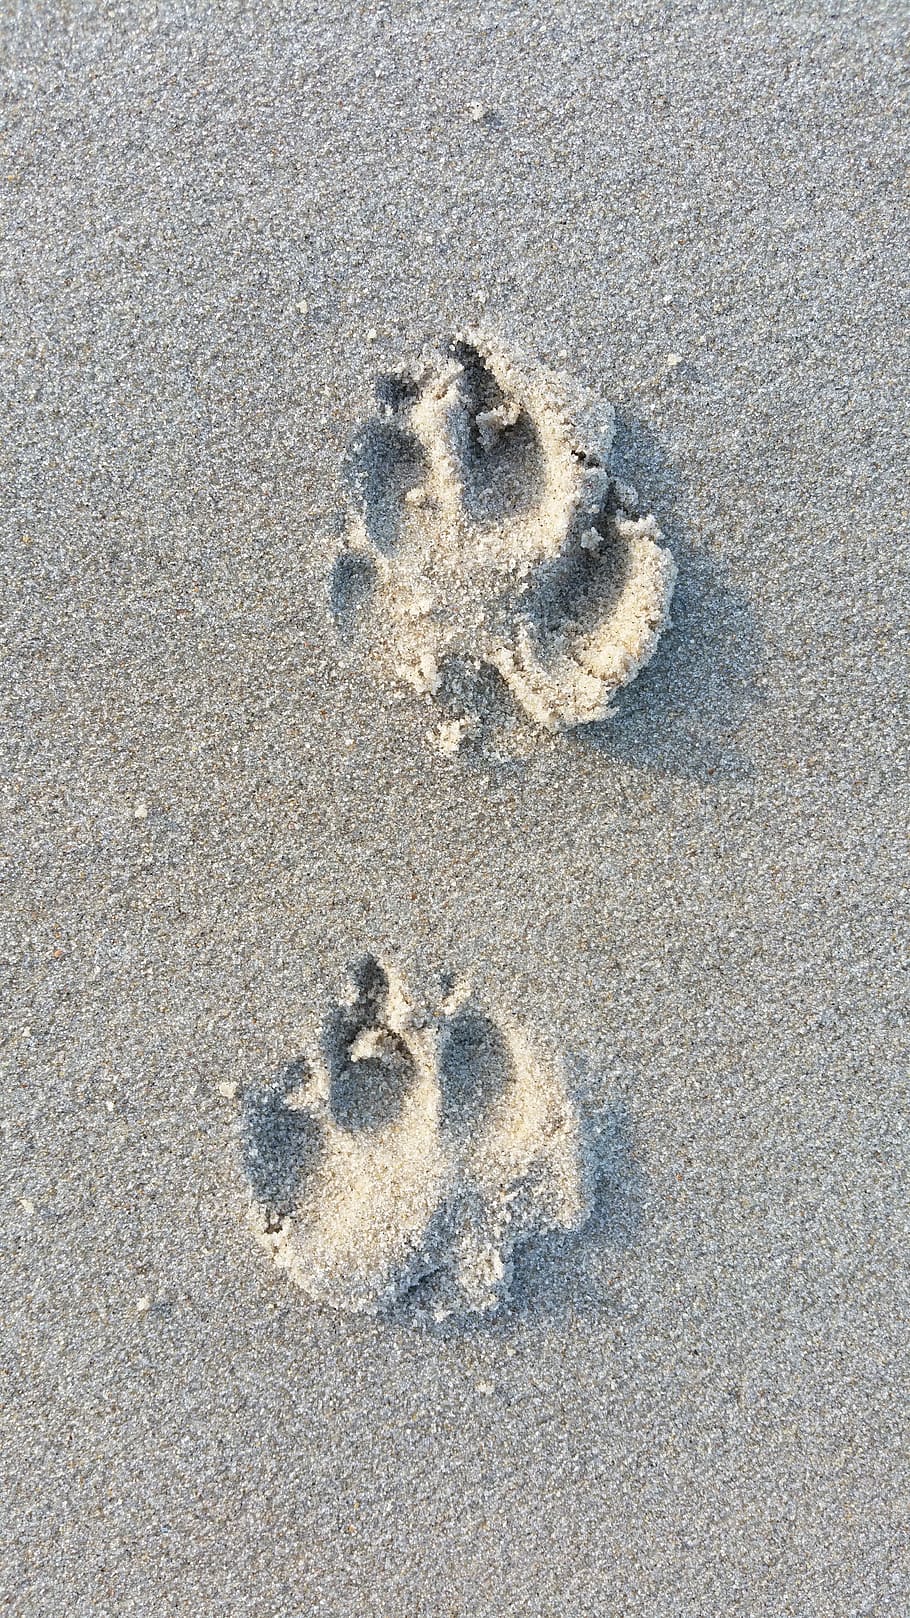 Dog, Footprints, Sand, Animals, paw print, animal track, high angle view